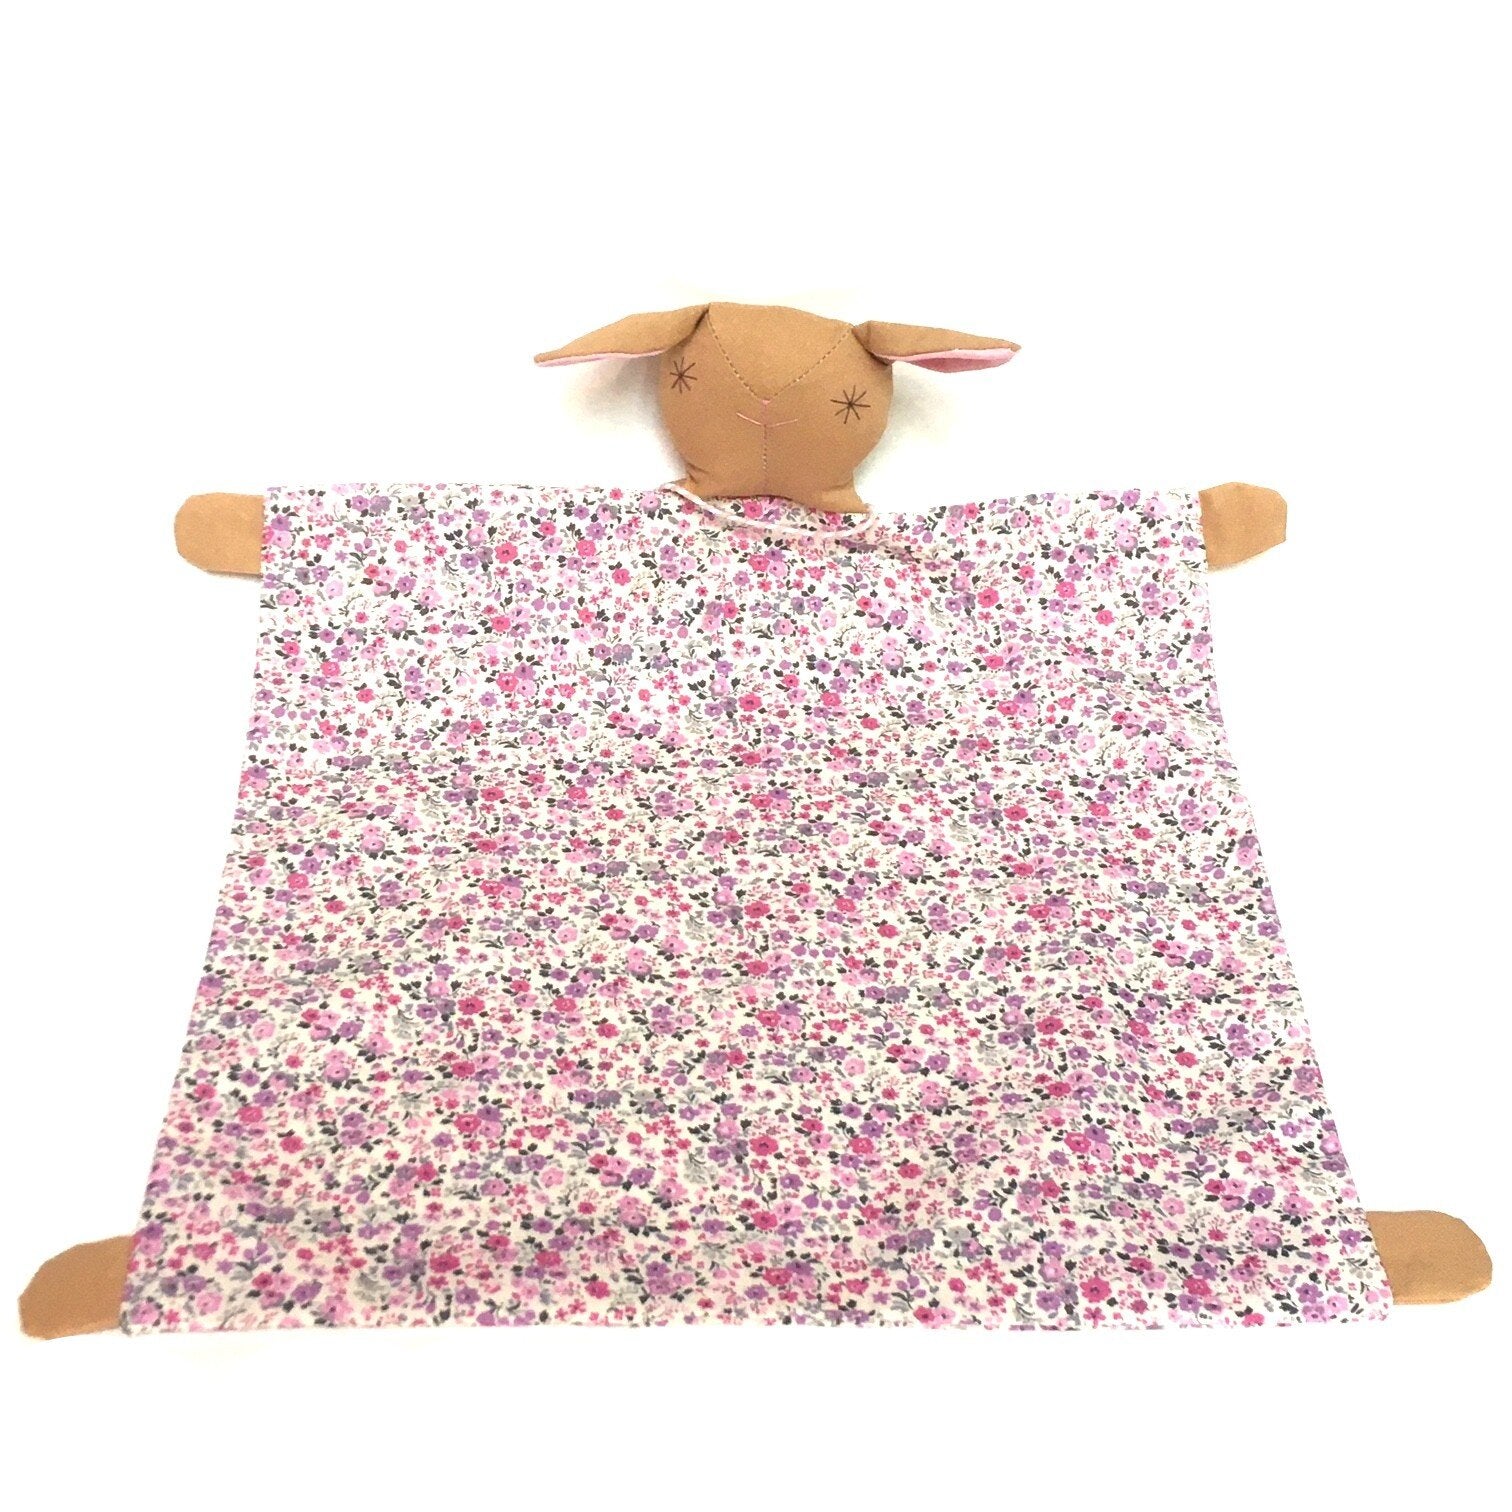 Lola baby comforter - The Bristol Artisan Handmade Sustainable Gifts and Homewares.